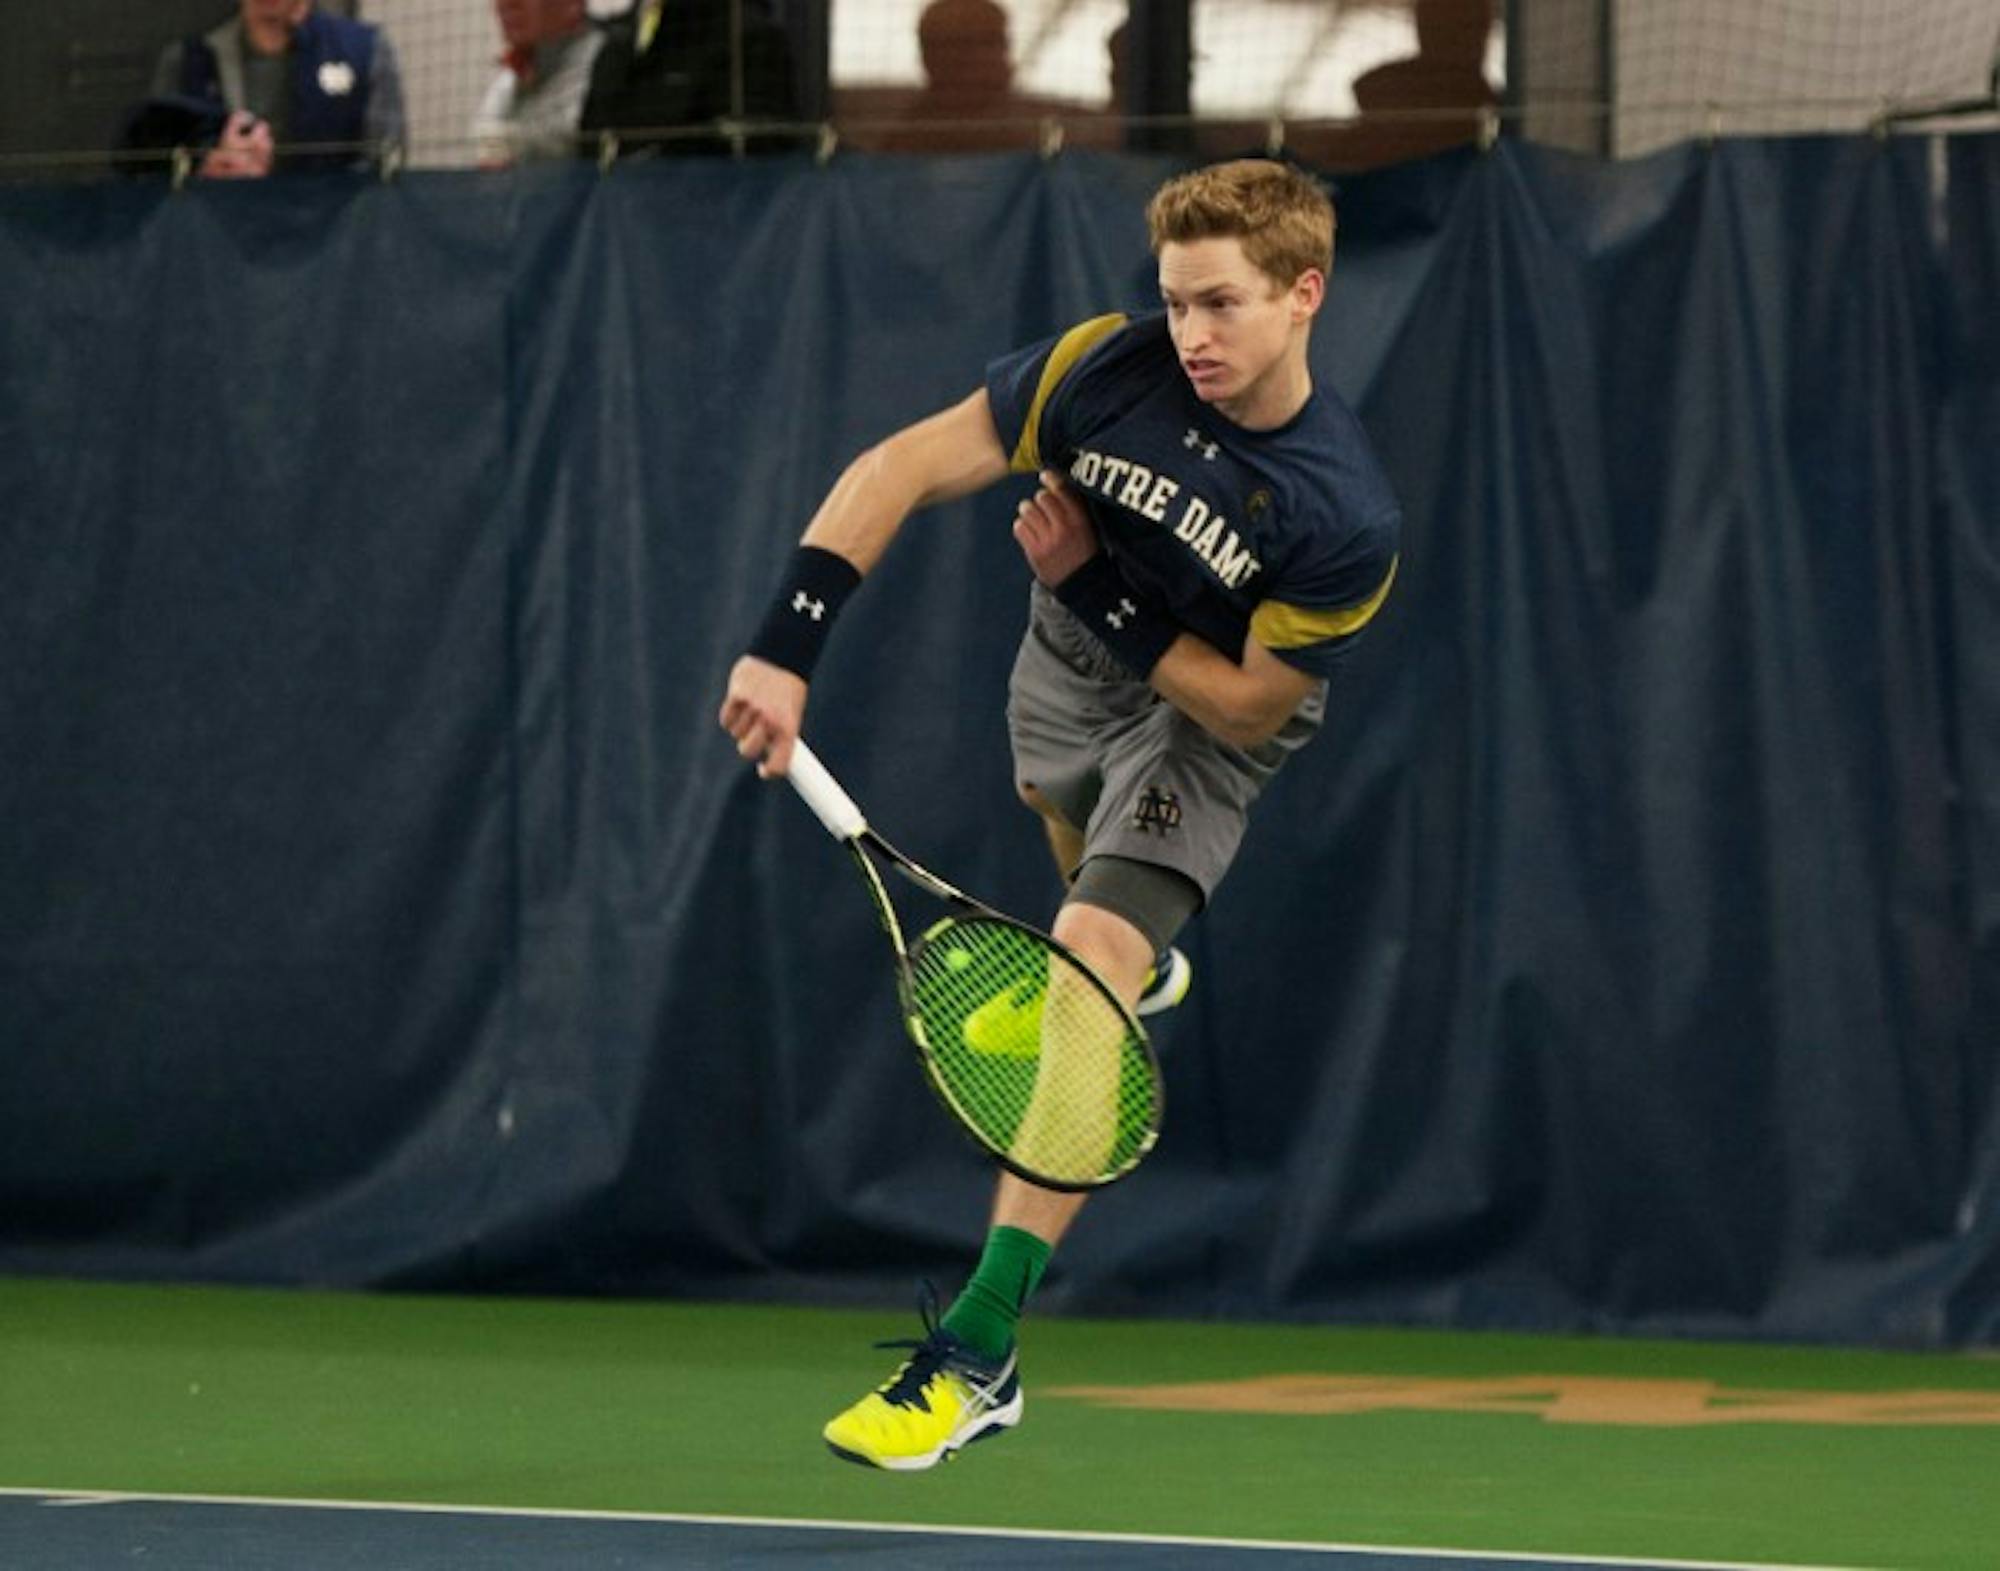 Irish senior Josh Hagar serves the ball during Notre Dame's 7-0 win over Boston College on Feb. 11 at Eck Tennis Pavilion.